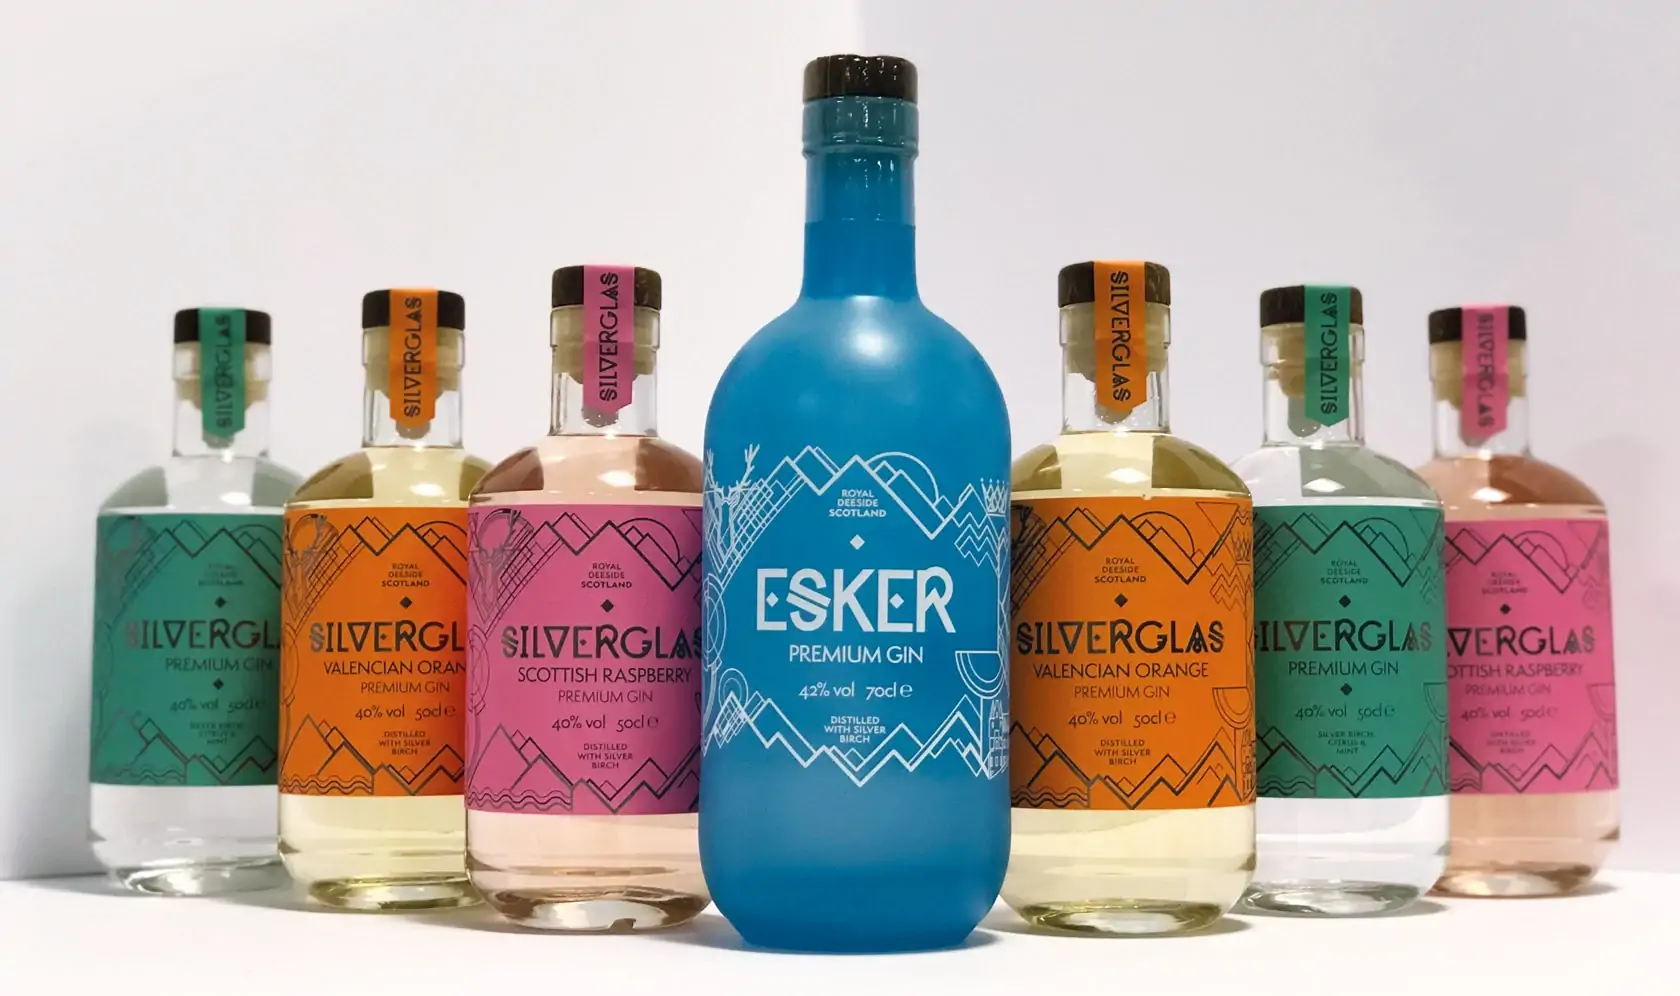 dcx-esker-gin-bottle-line-up